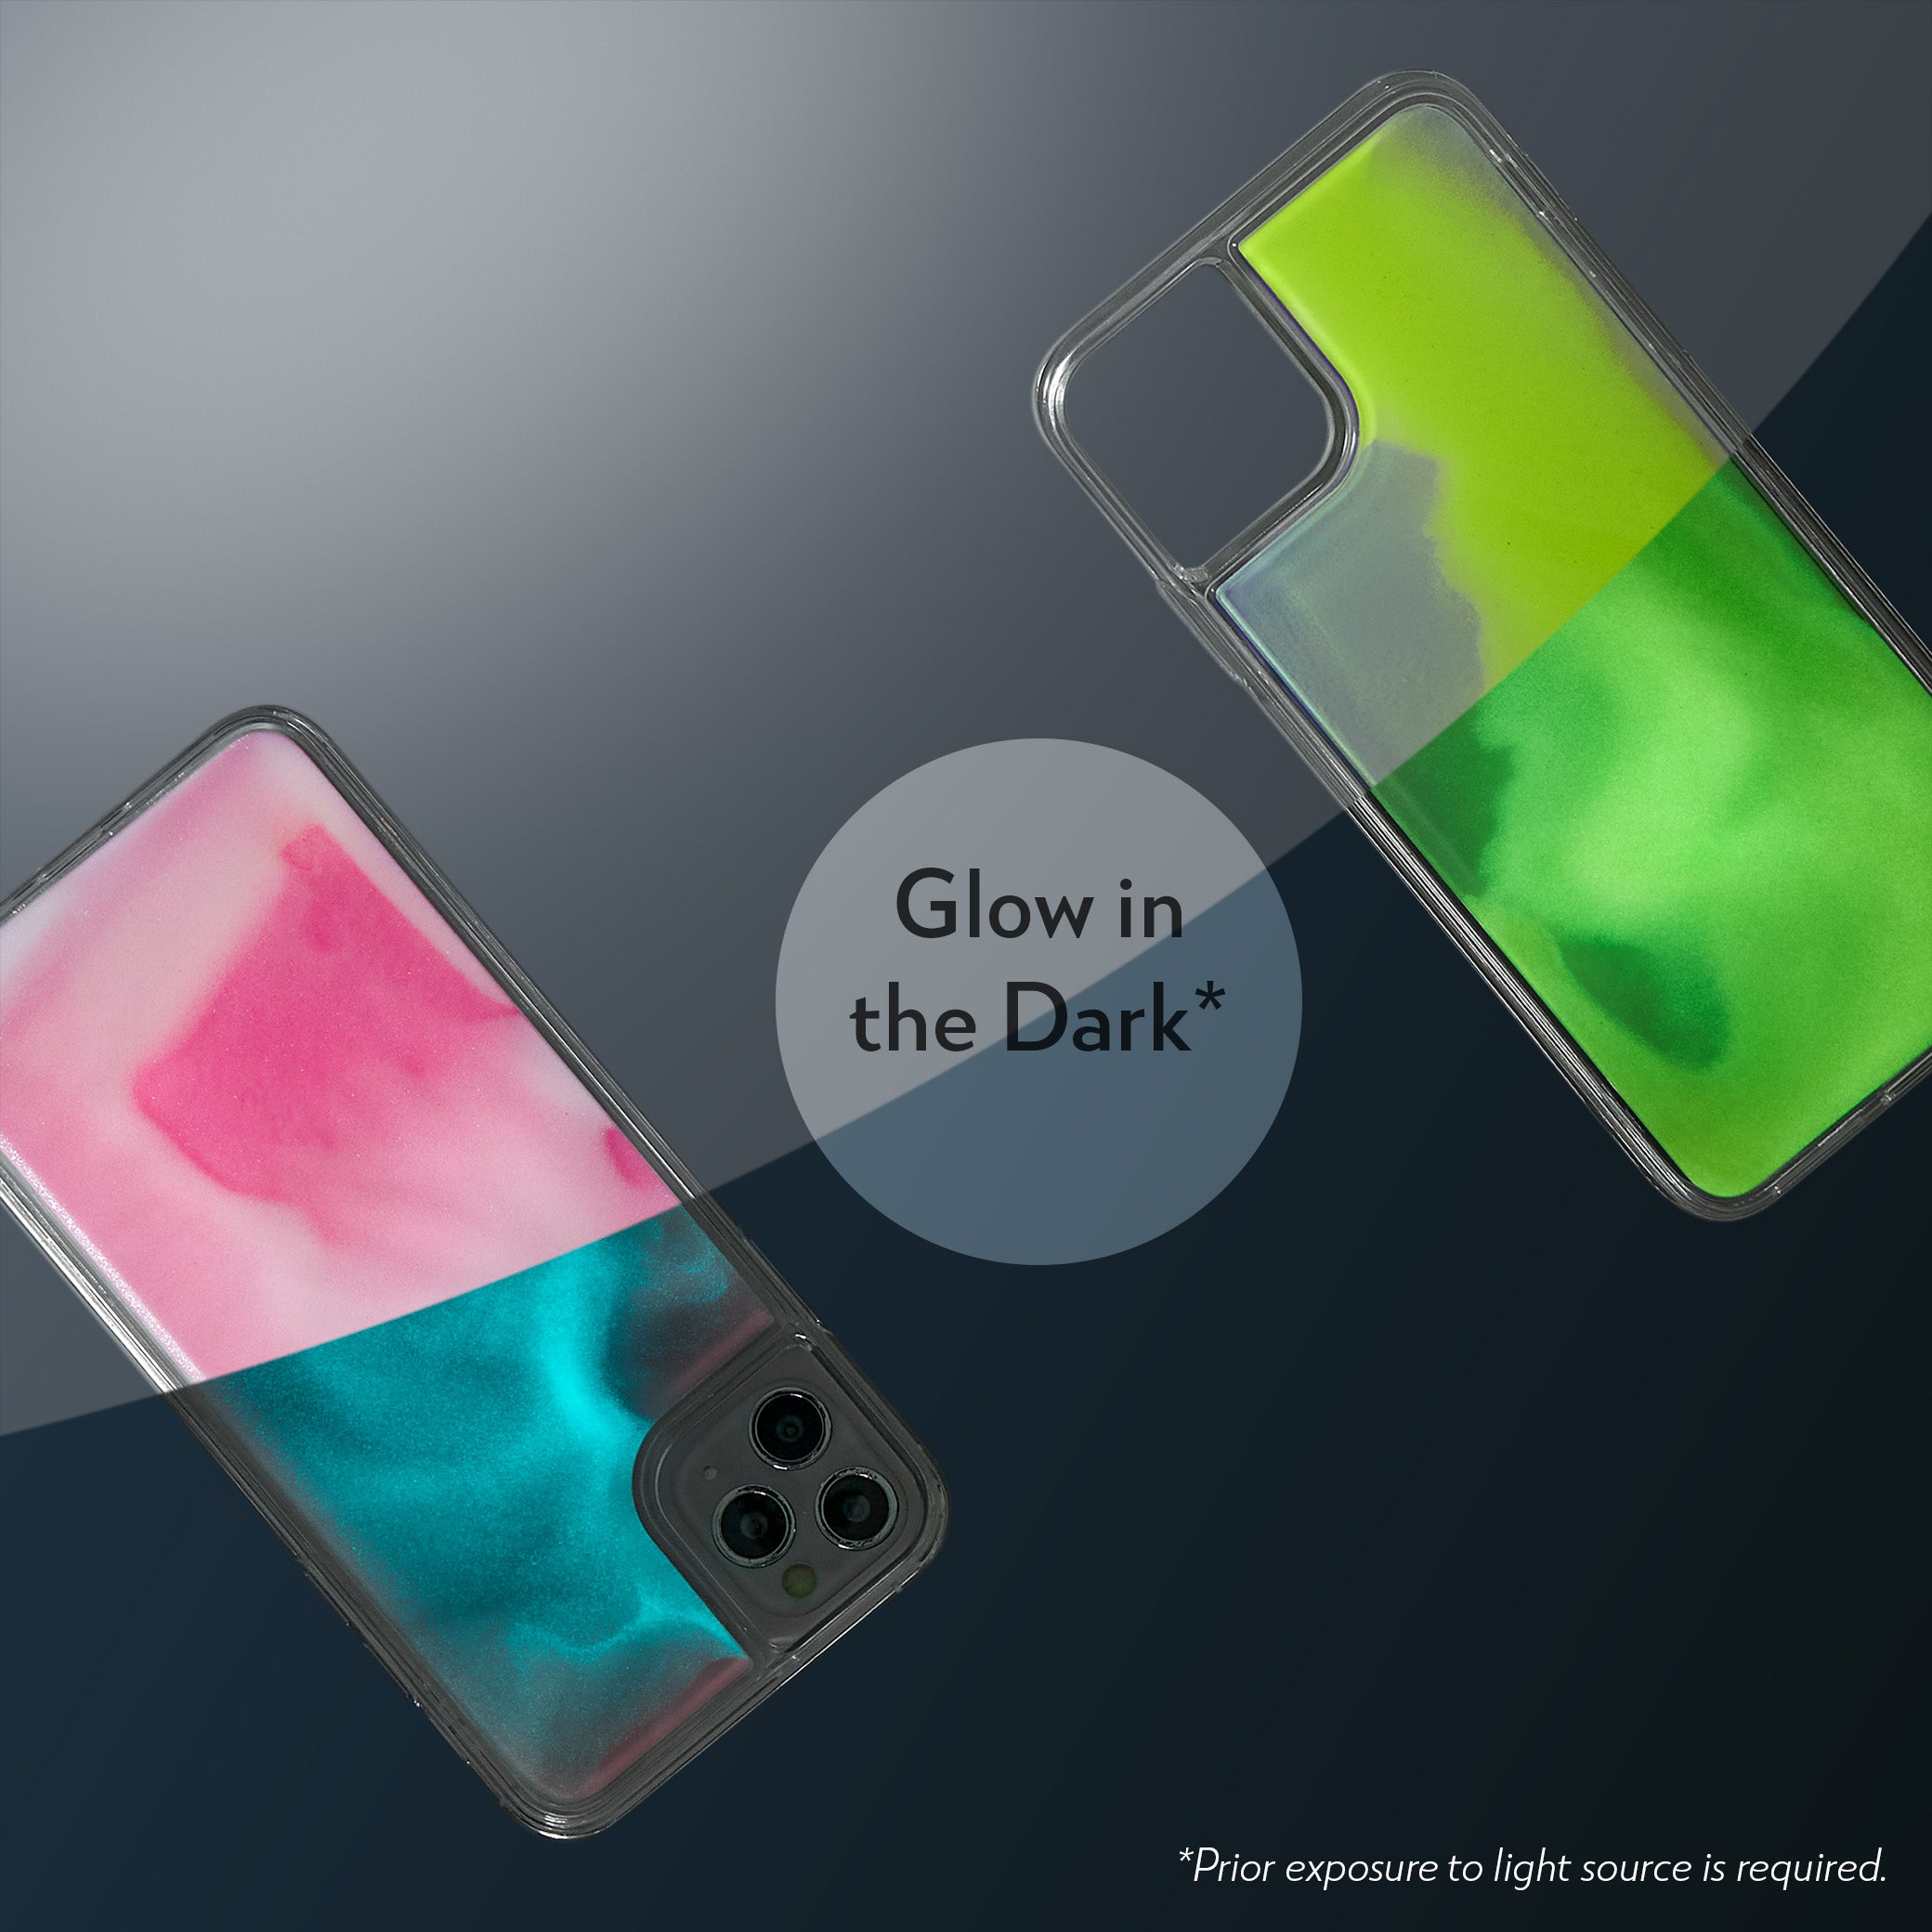 Neon Sand Case for iPhone 14 plus - Neon-Yellow Lemonade